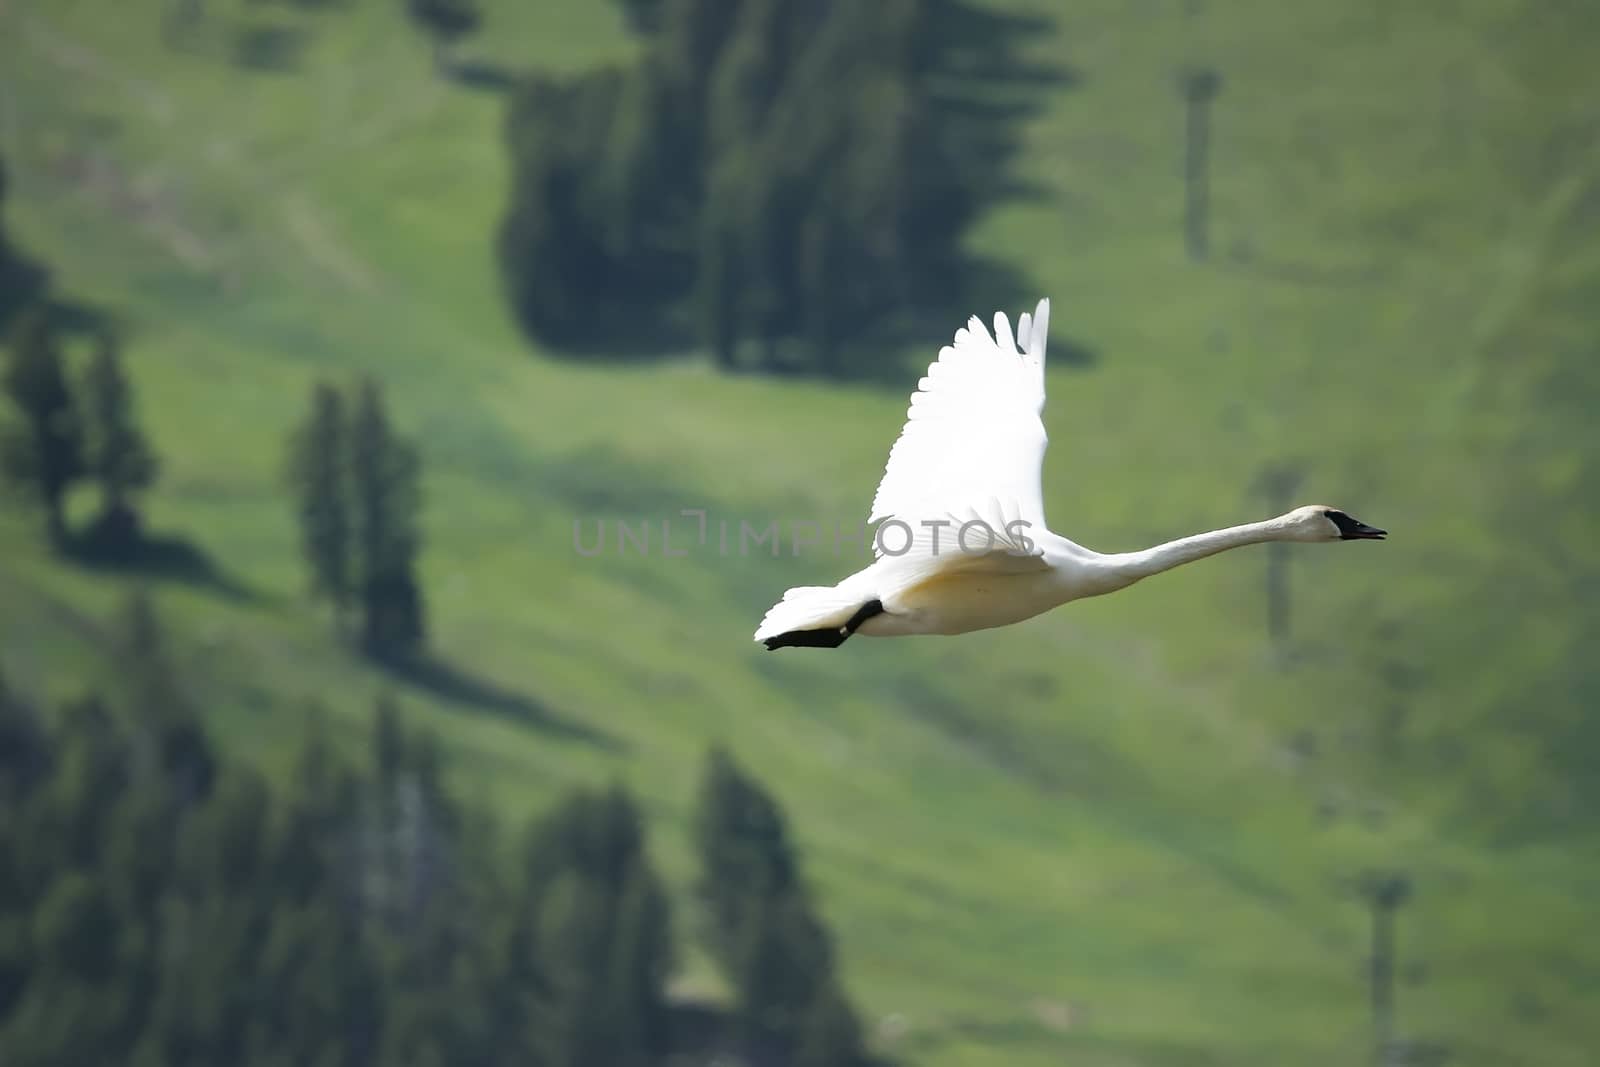 Trumpeter Swan (Cygnus buccinator) flying